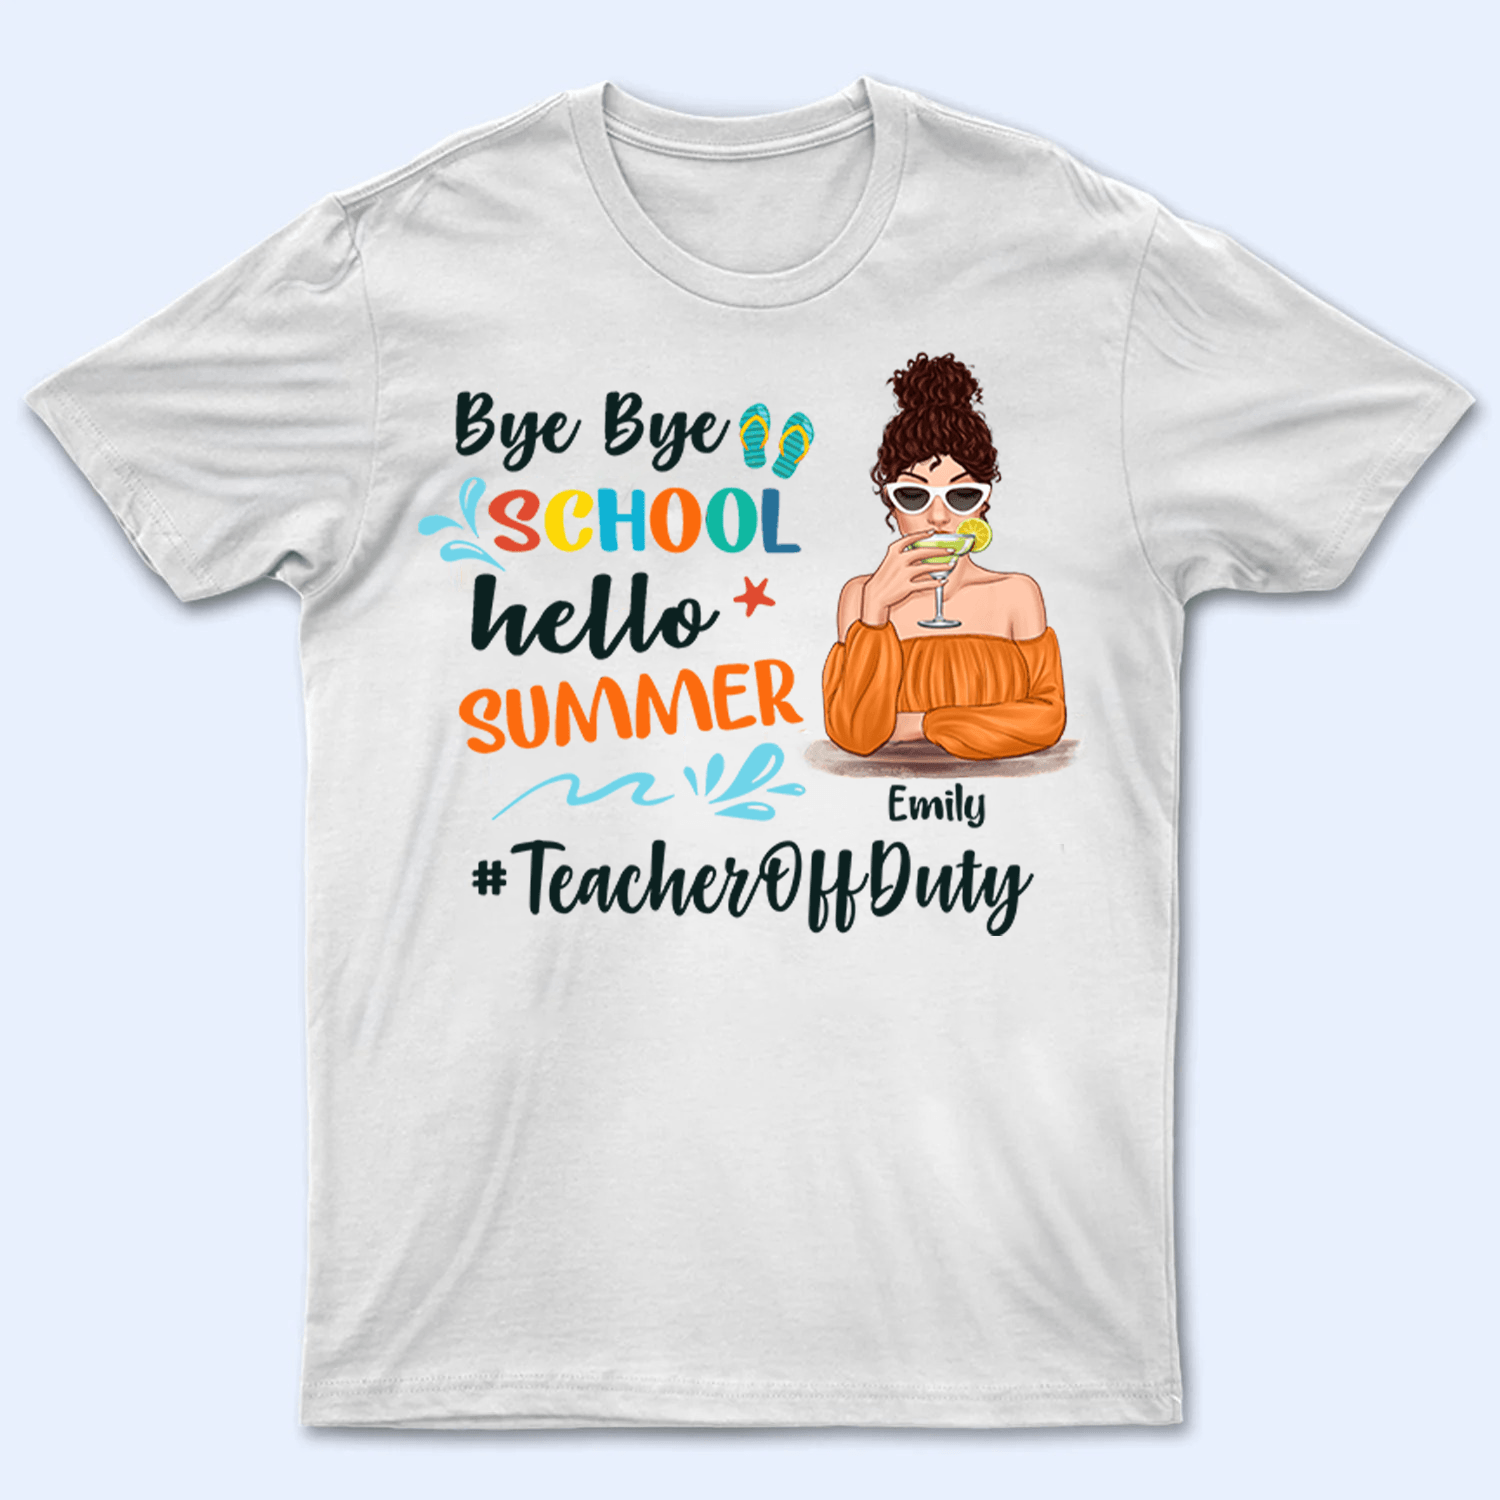 Bye Bye School Hello Summer - Personalized Custom T Shirt - Summer Break, Last Day Of School, Birthday, Loving, Funny Gift for Teacher, Kindergarten, Preschool, Pre K, Paraprofessional - Suzitee Store